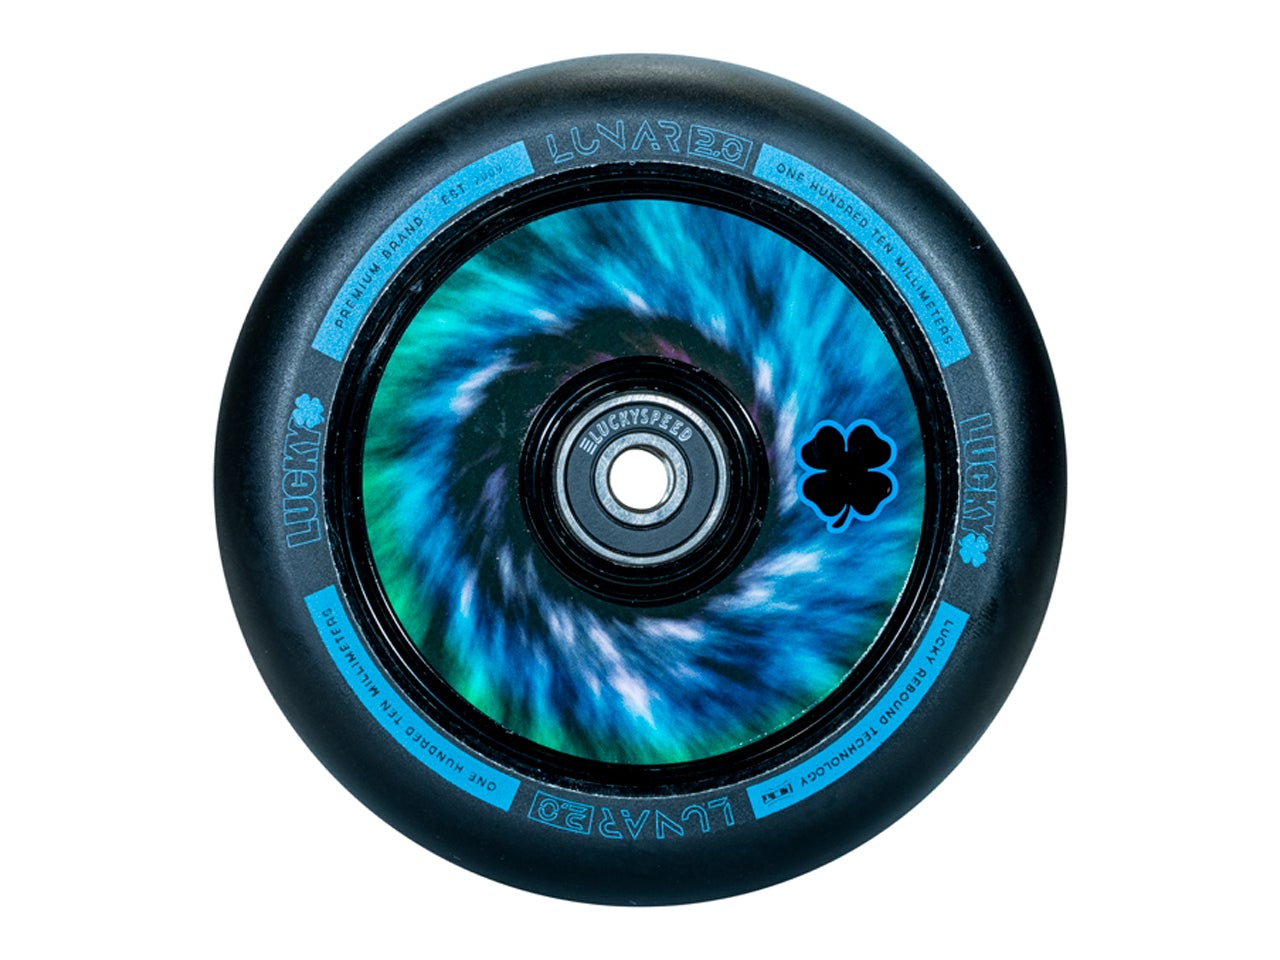 METAL CORE Roue Radius pour scooter Freestyle Diamètre 120 mm (Bleu)